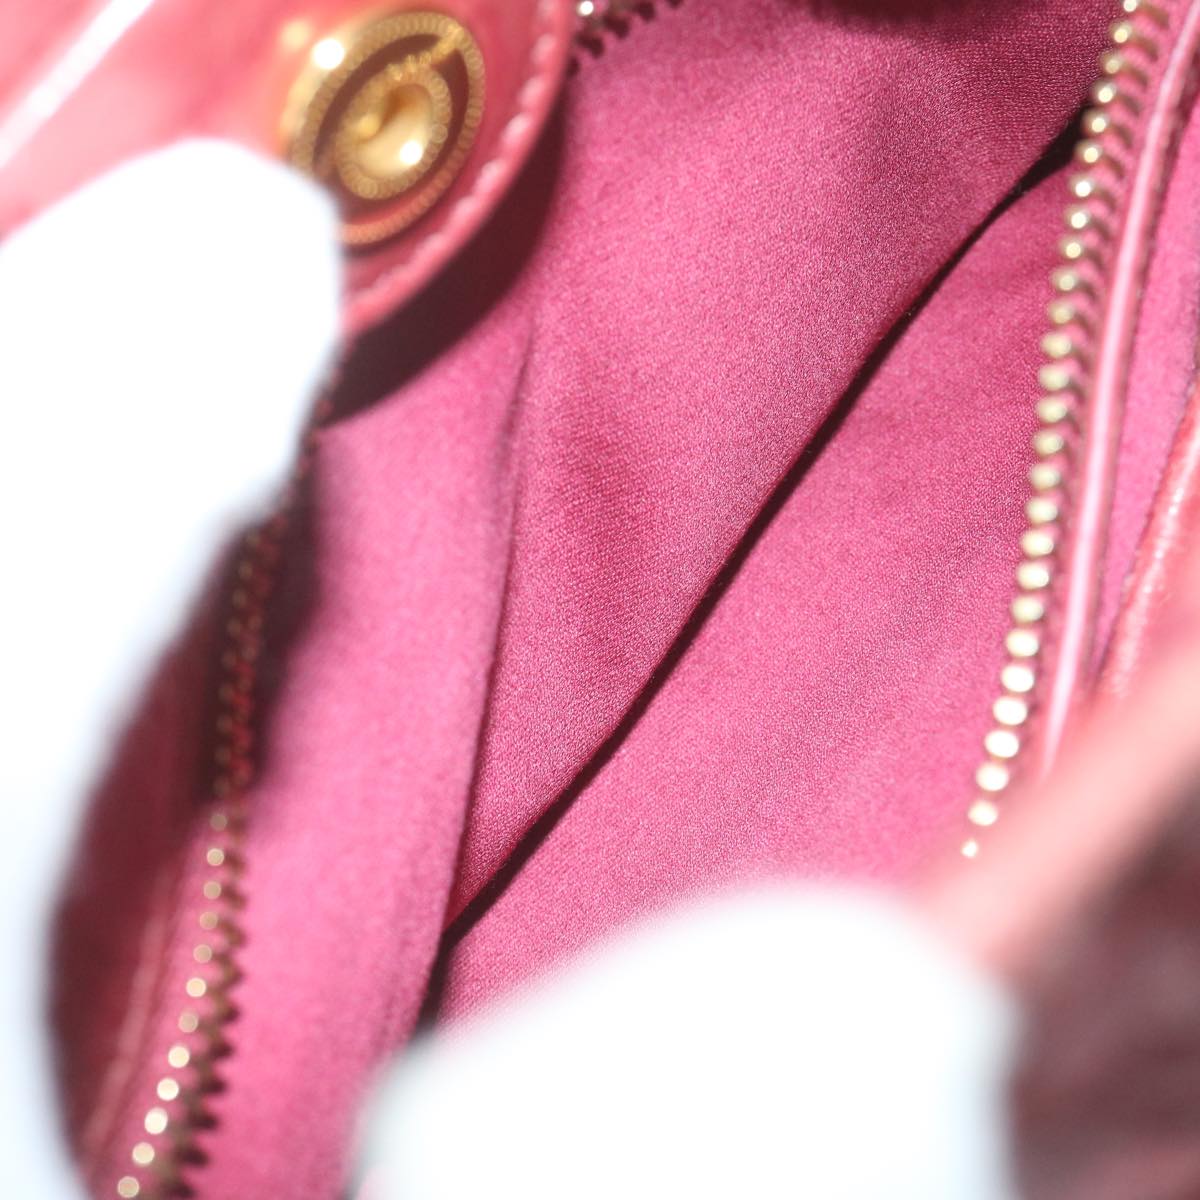 Miu Miu Hand Bag Leather 2way Shoulder Bag Red Auth am5603